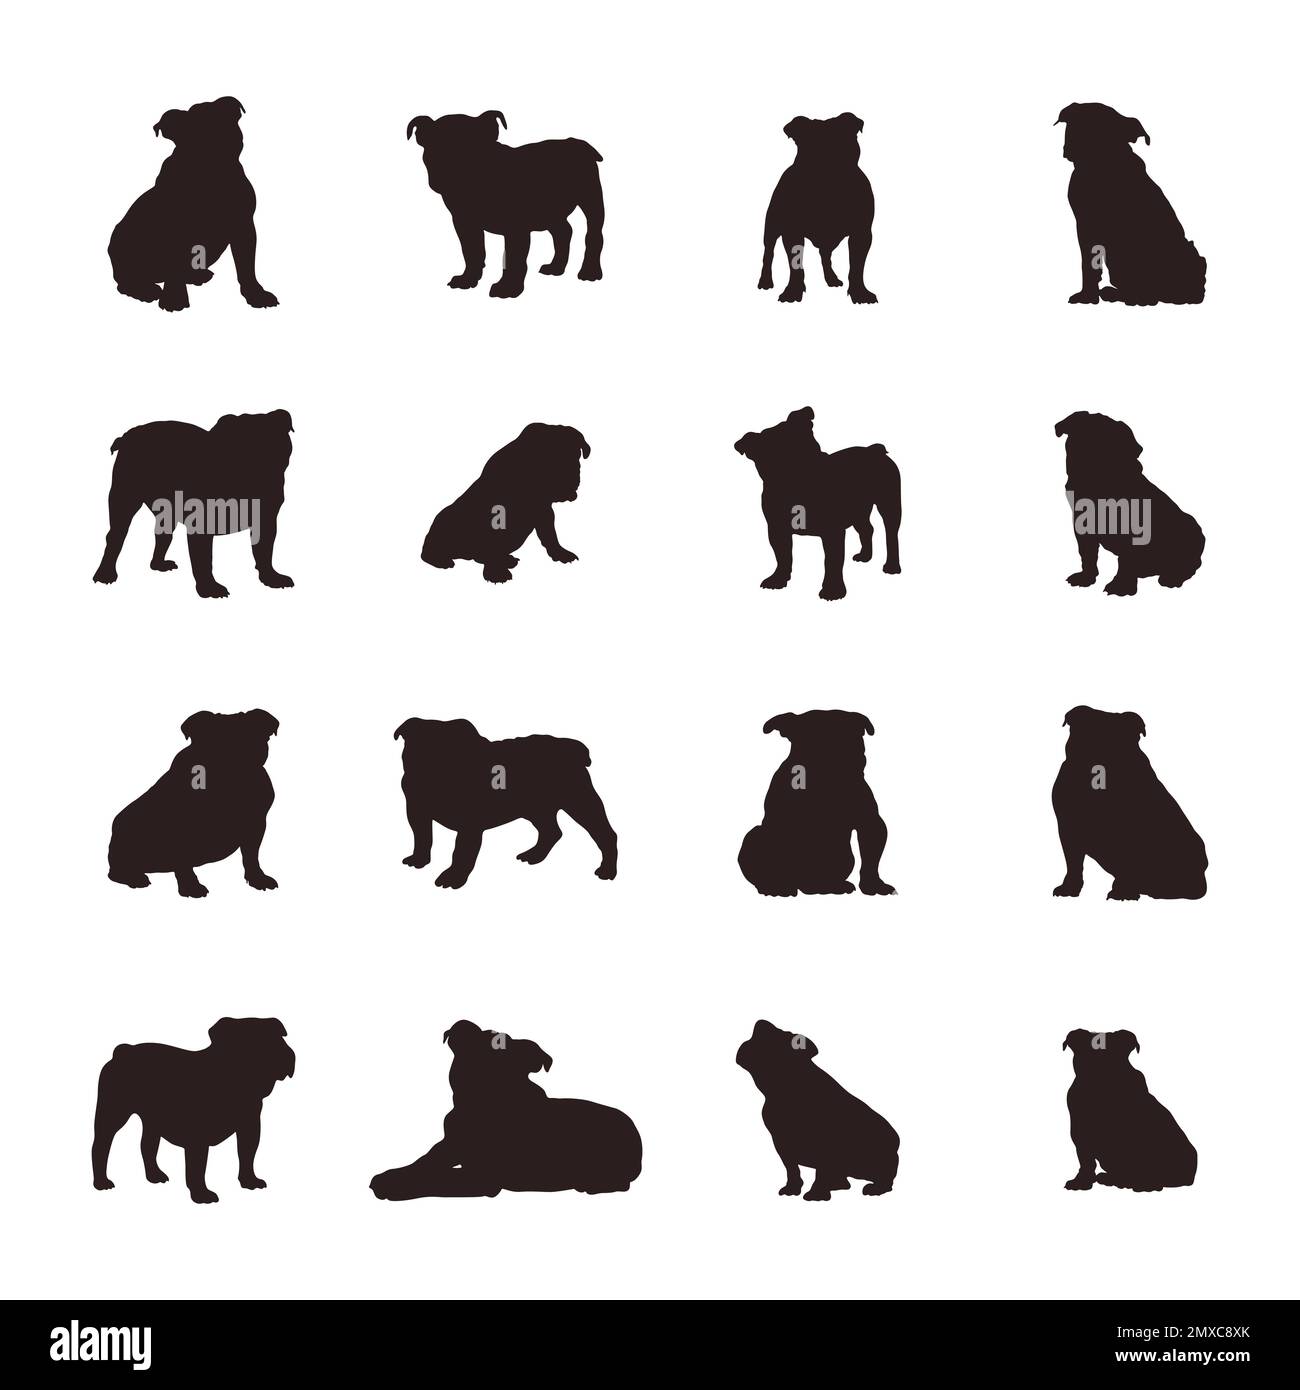 English bulldog silhouettes Stock Vector